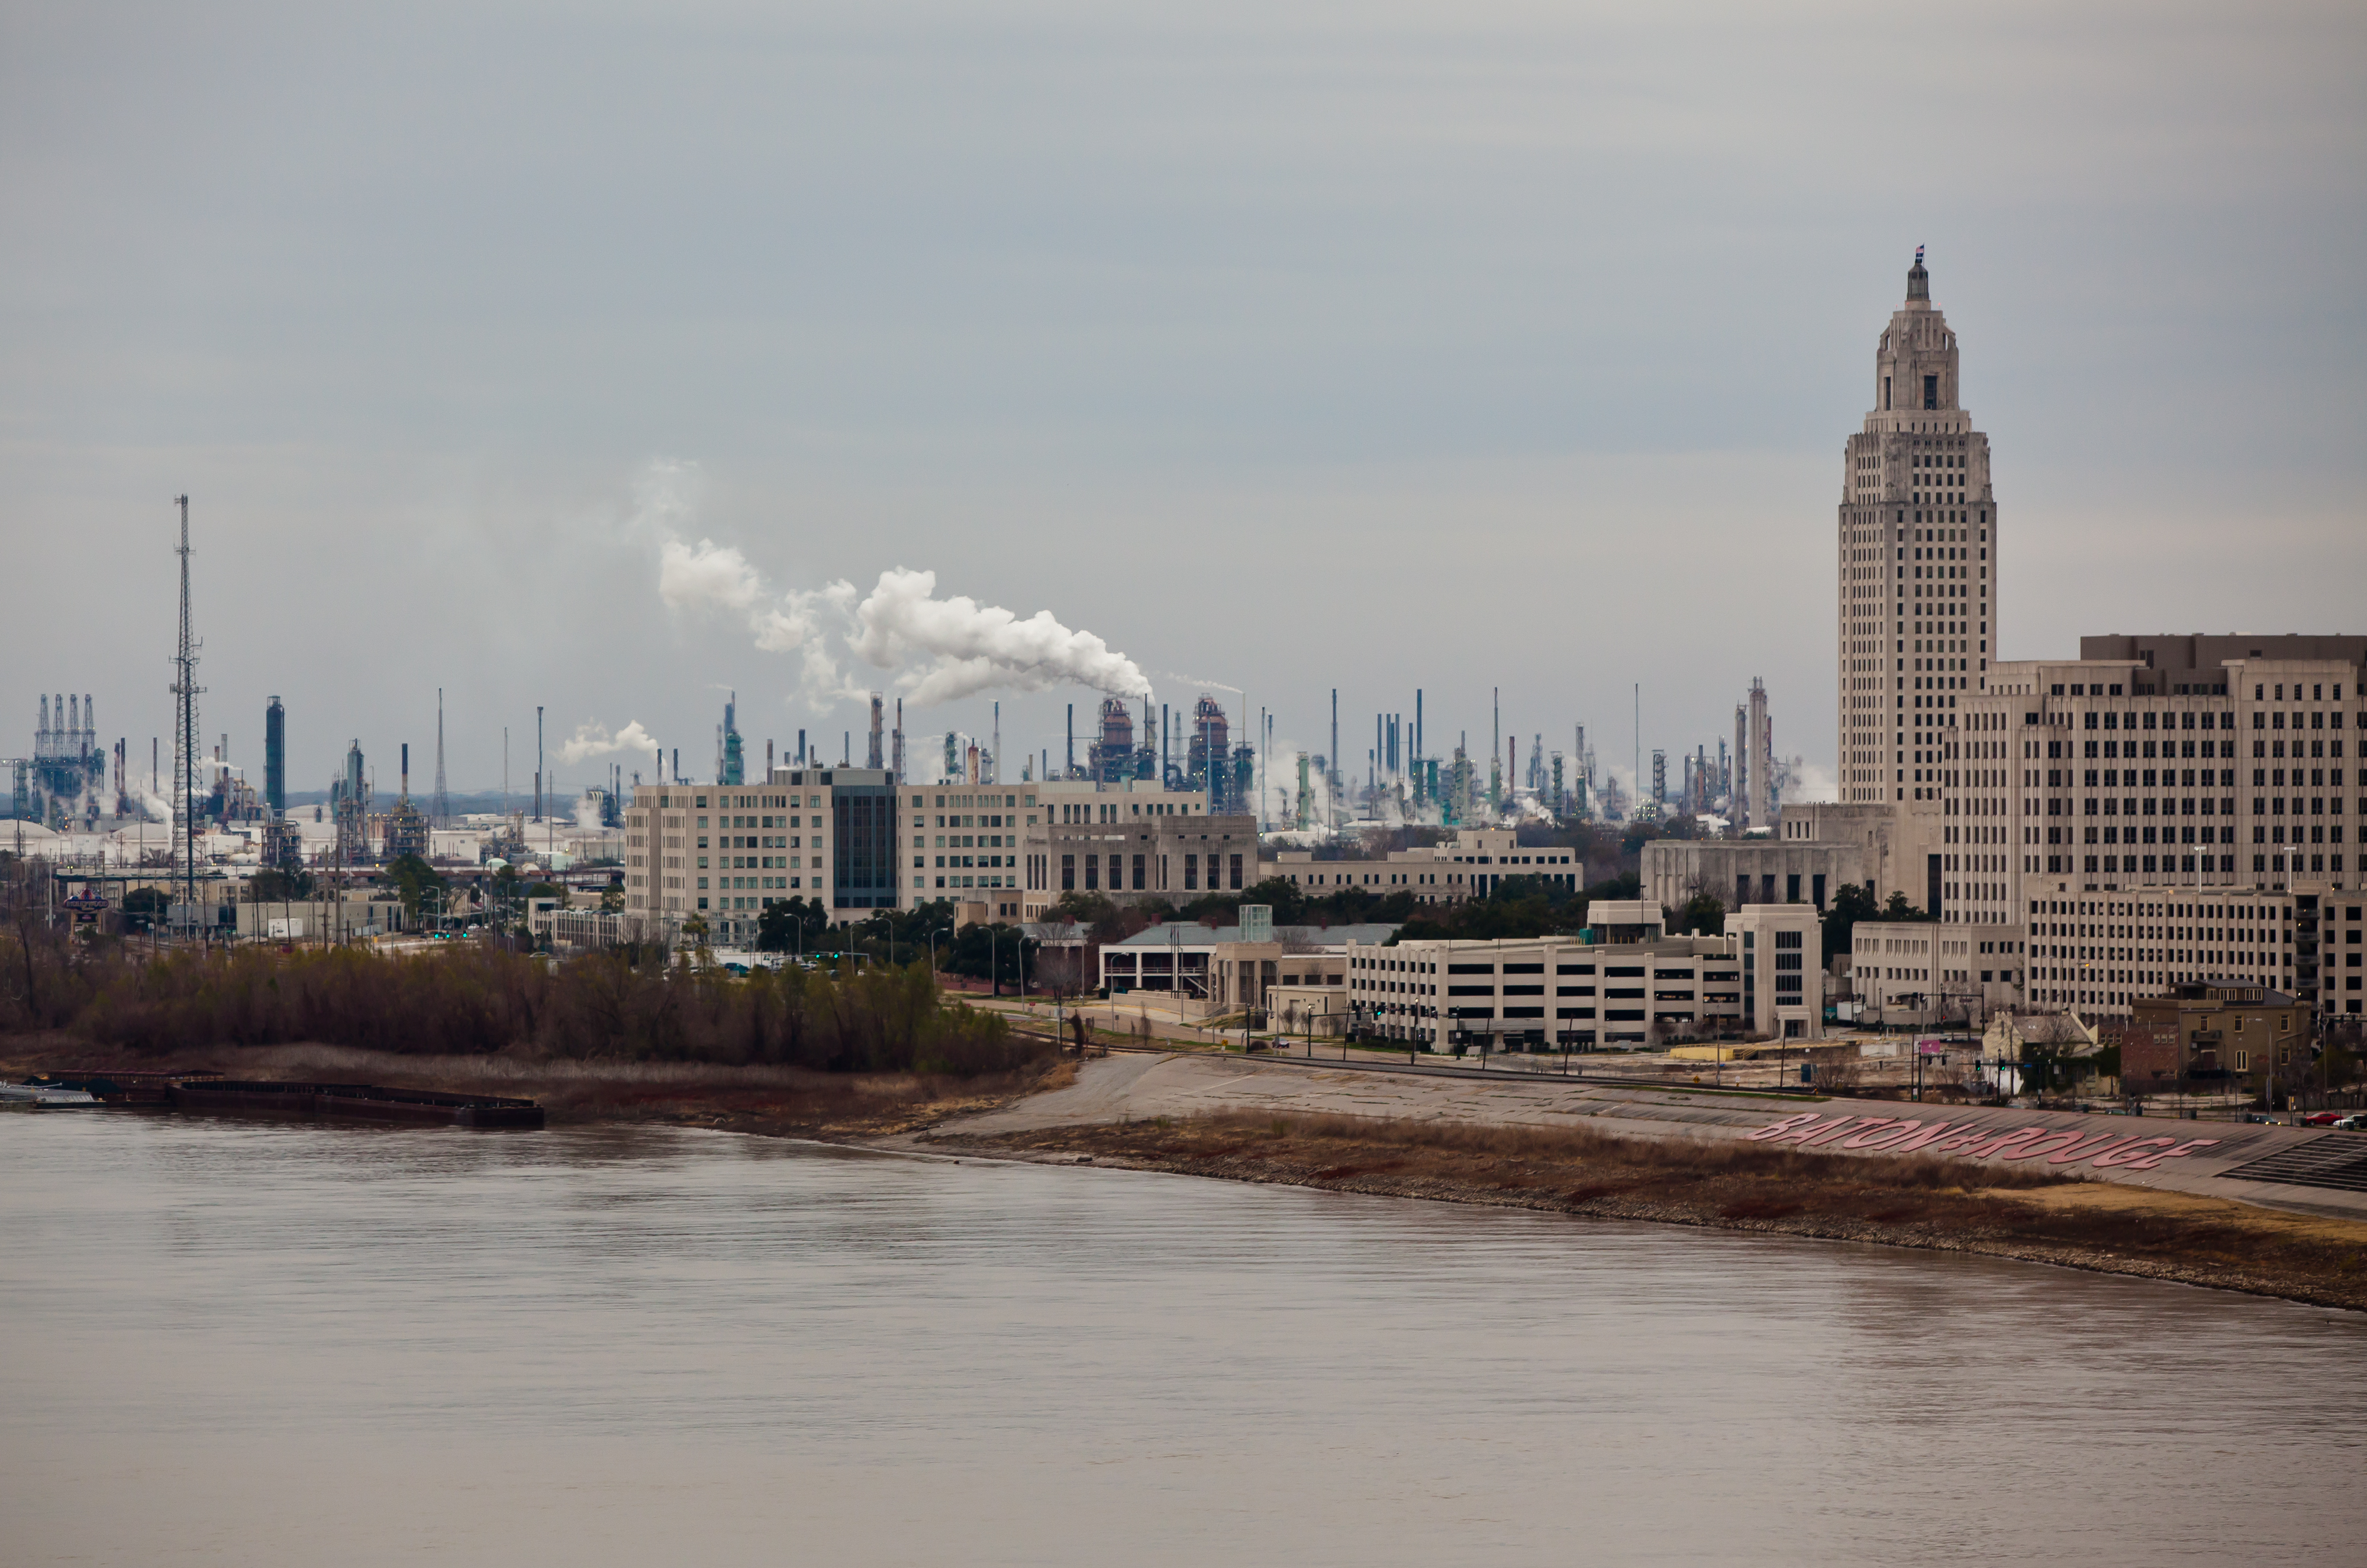 Exxon's Baton Rouge Facilities in Louisiana's 'Cancer Alley' 3 - Photographer Julie Dermansky